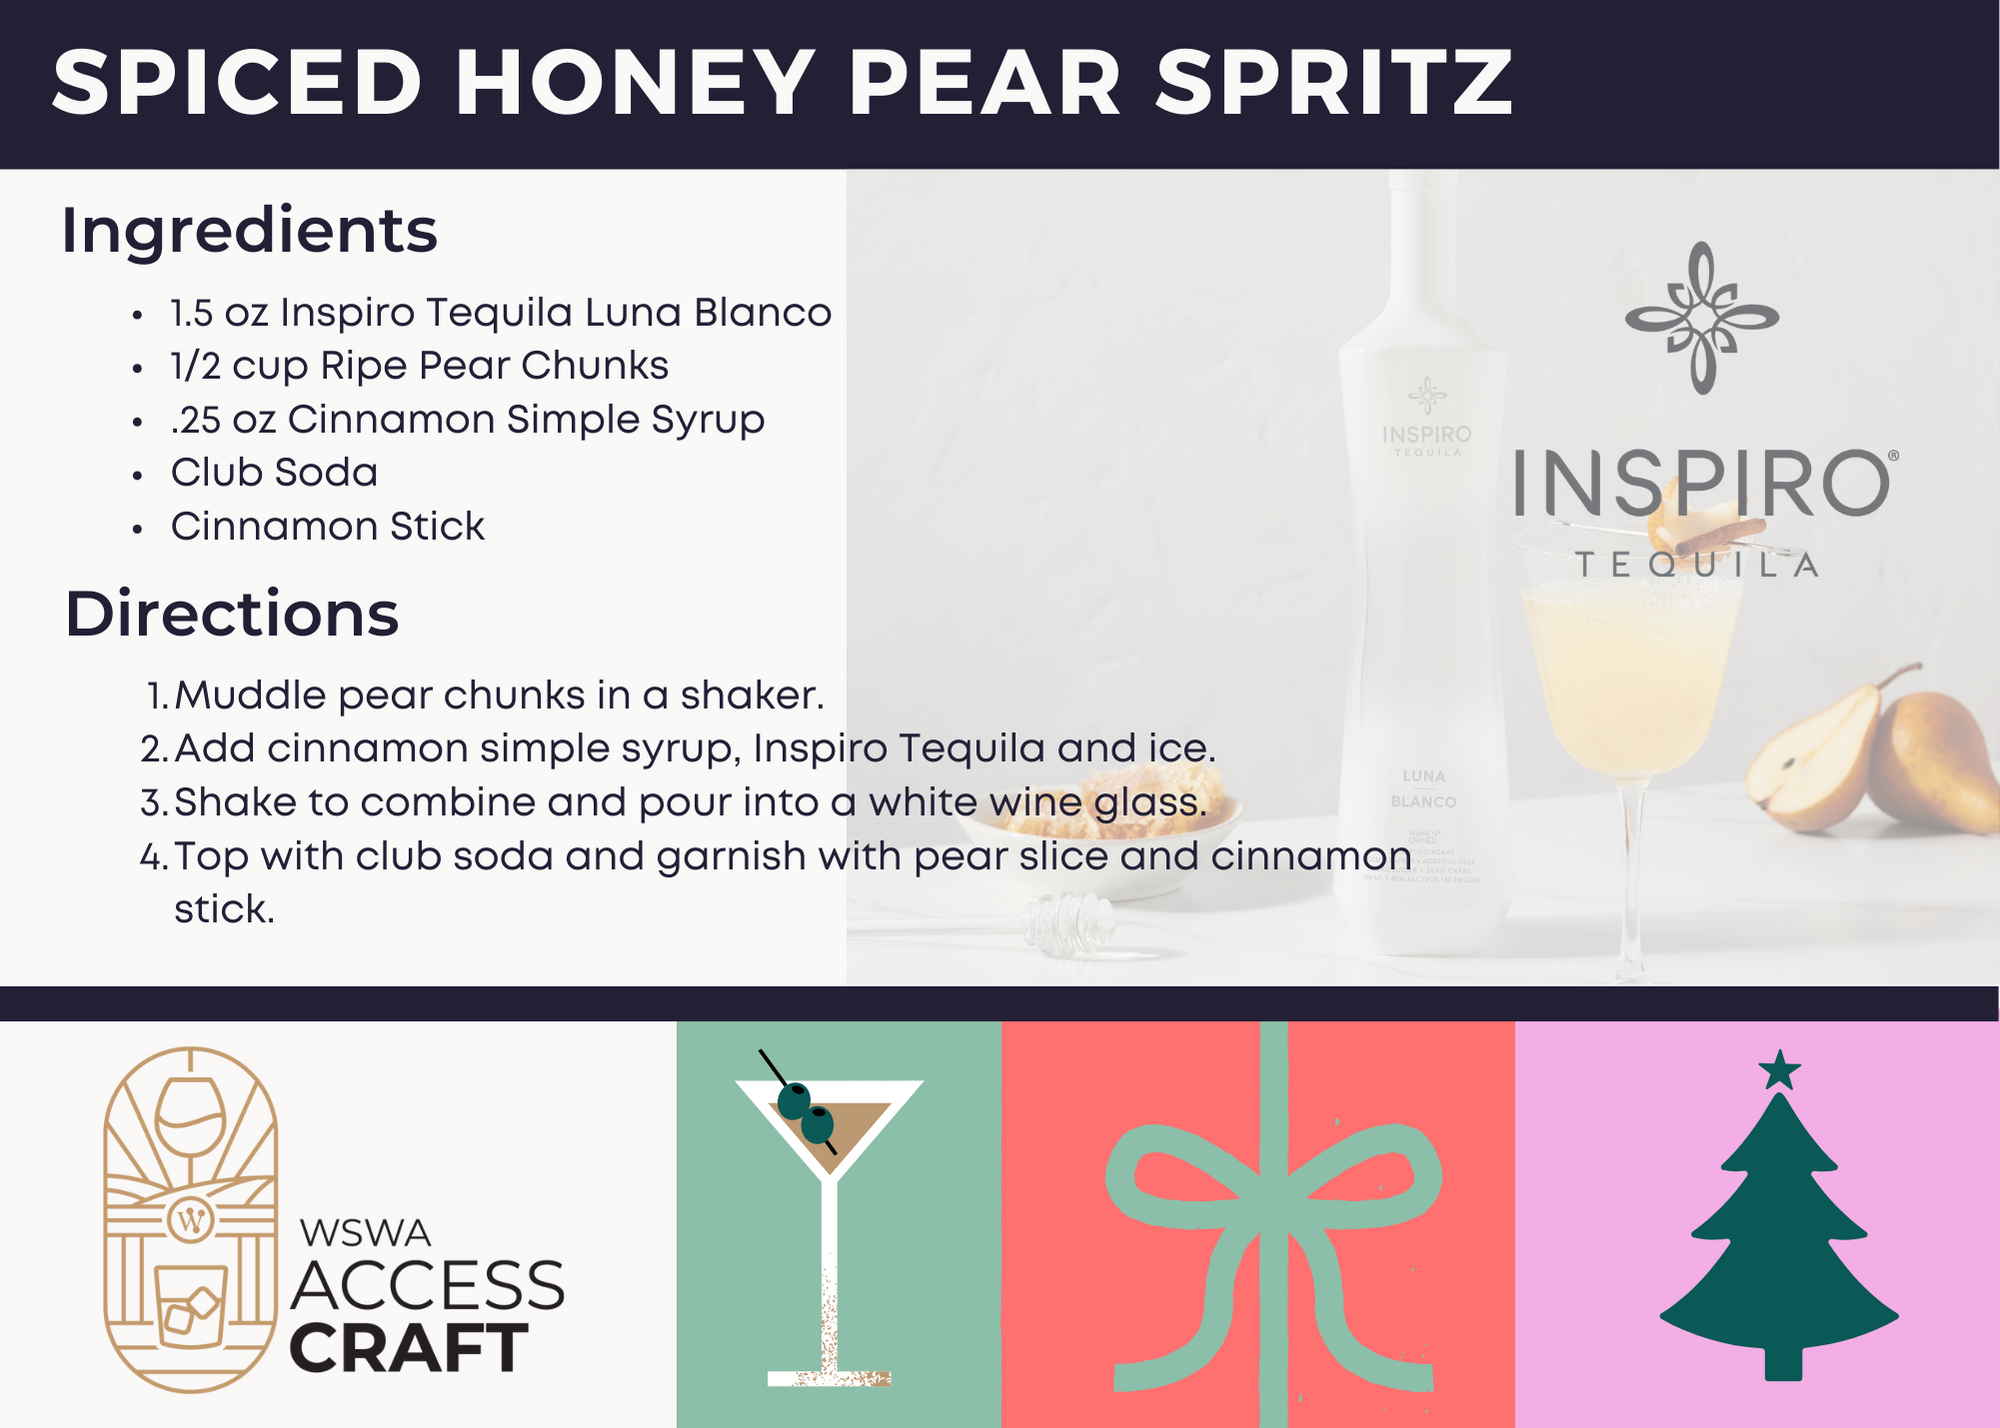 Inspiro Tequila Spiced Honey Pear Spritz